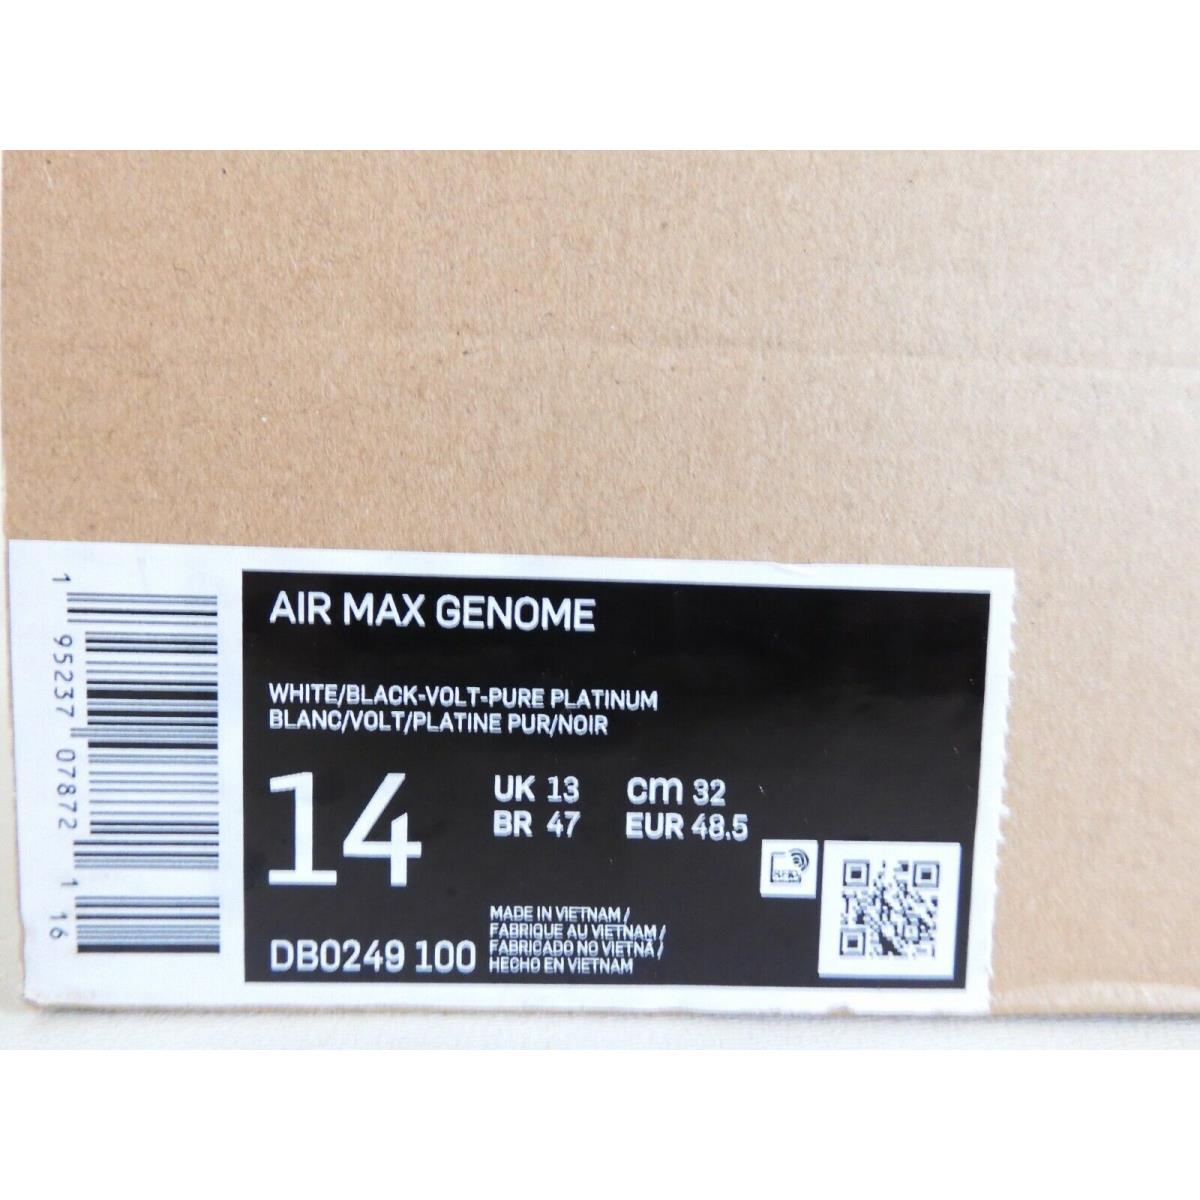 Nike shoes Air Max Genome - White 3